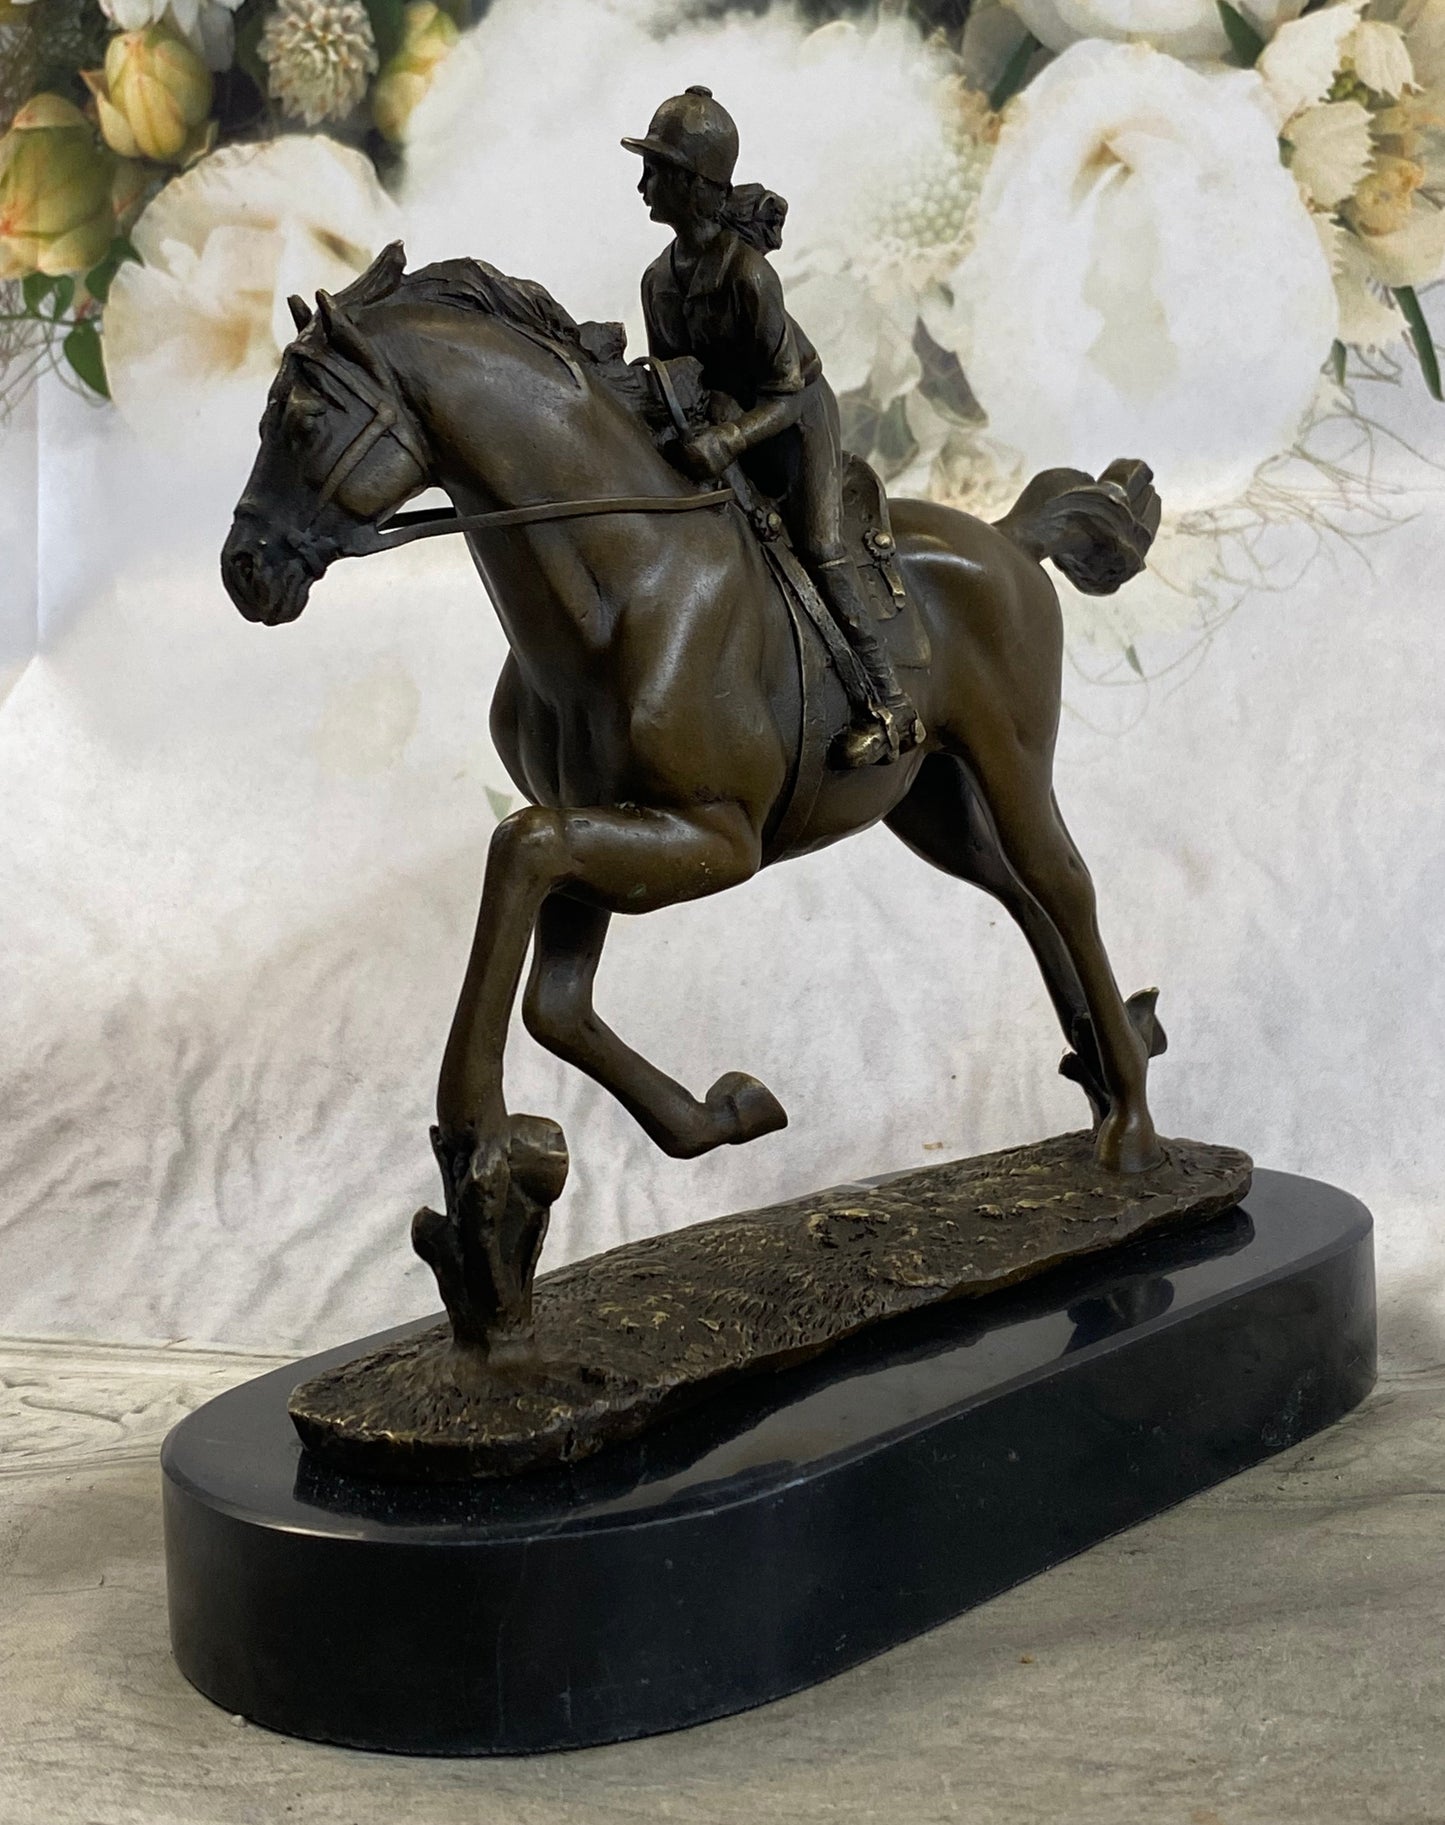 Female Equestrian Jockey Horseback Riding Bronze Statue Sculpture Figure 9" x 9"